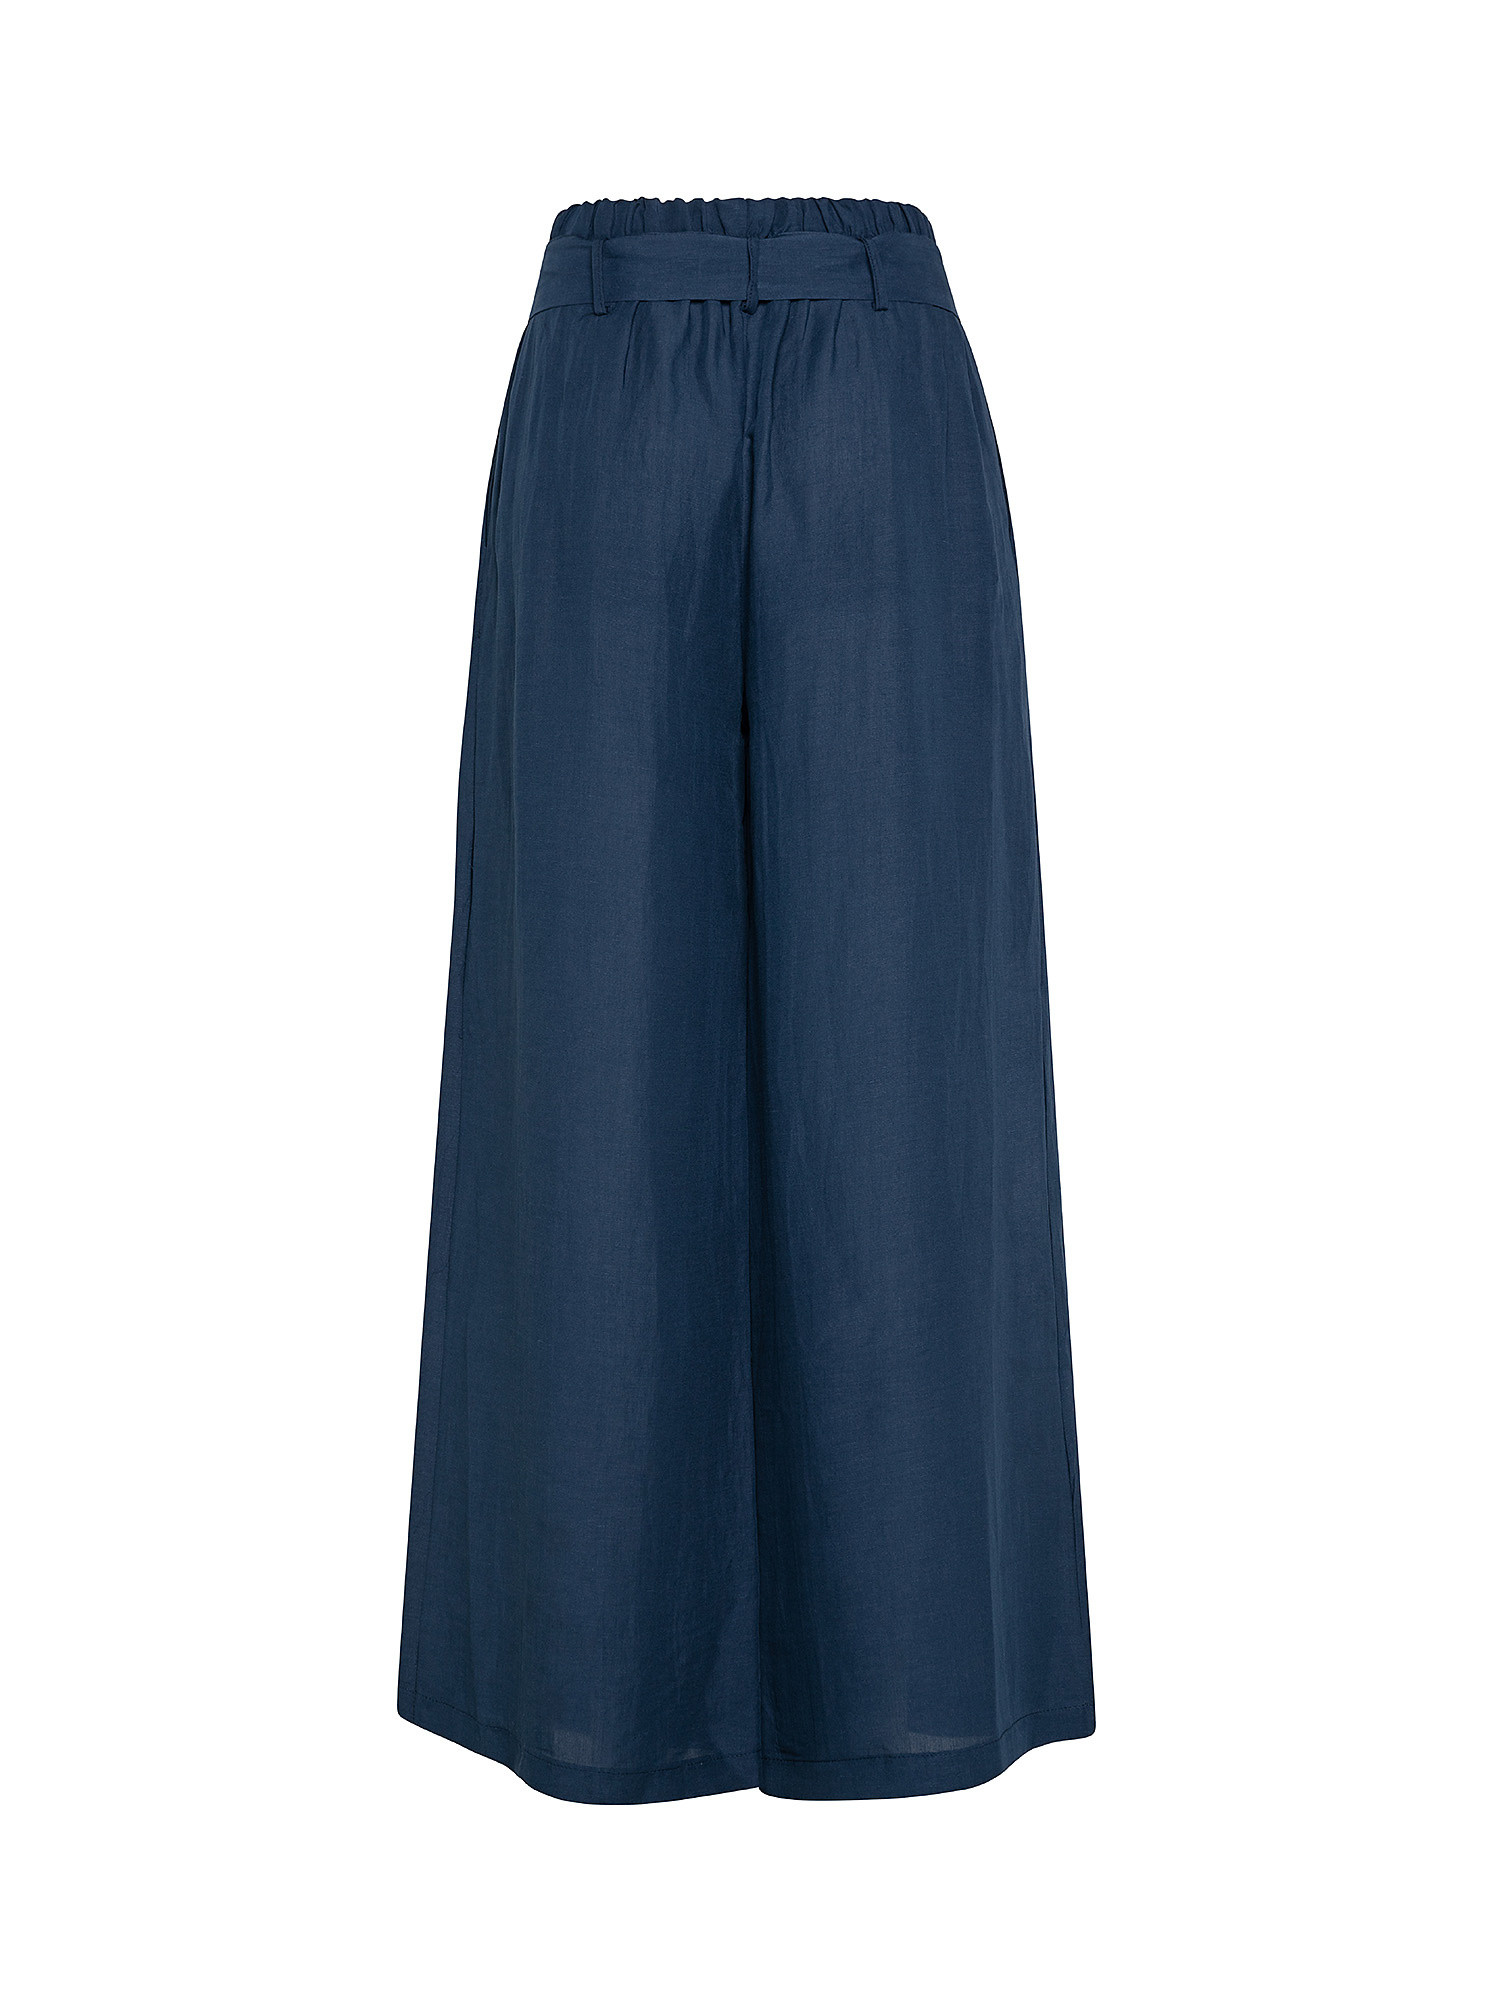 Trouser skirt, Denim, large image number 1